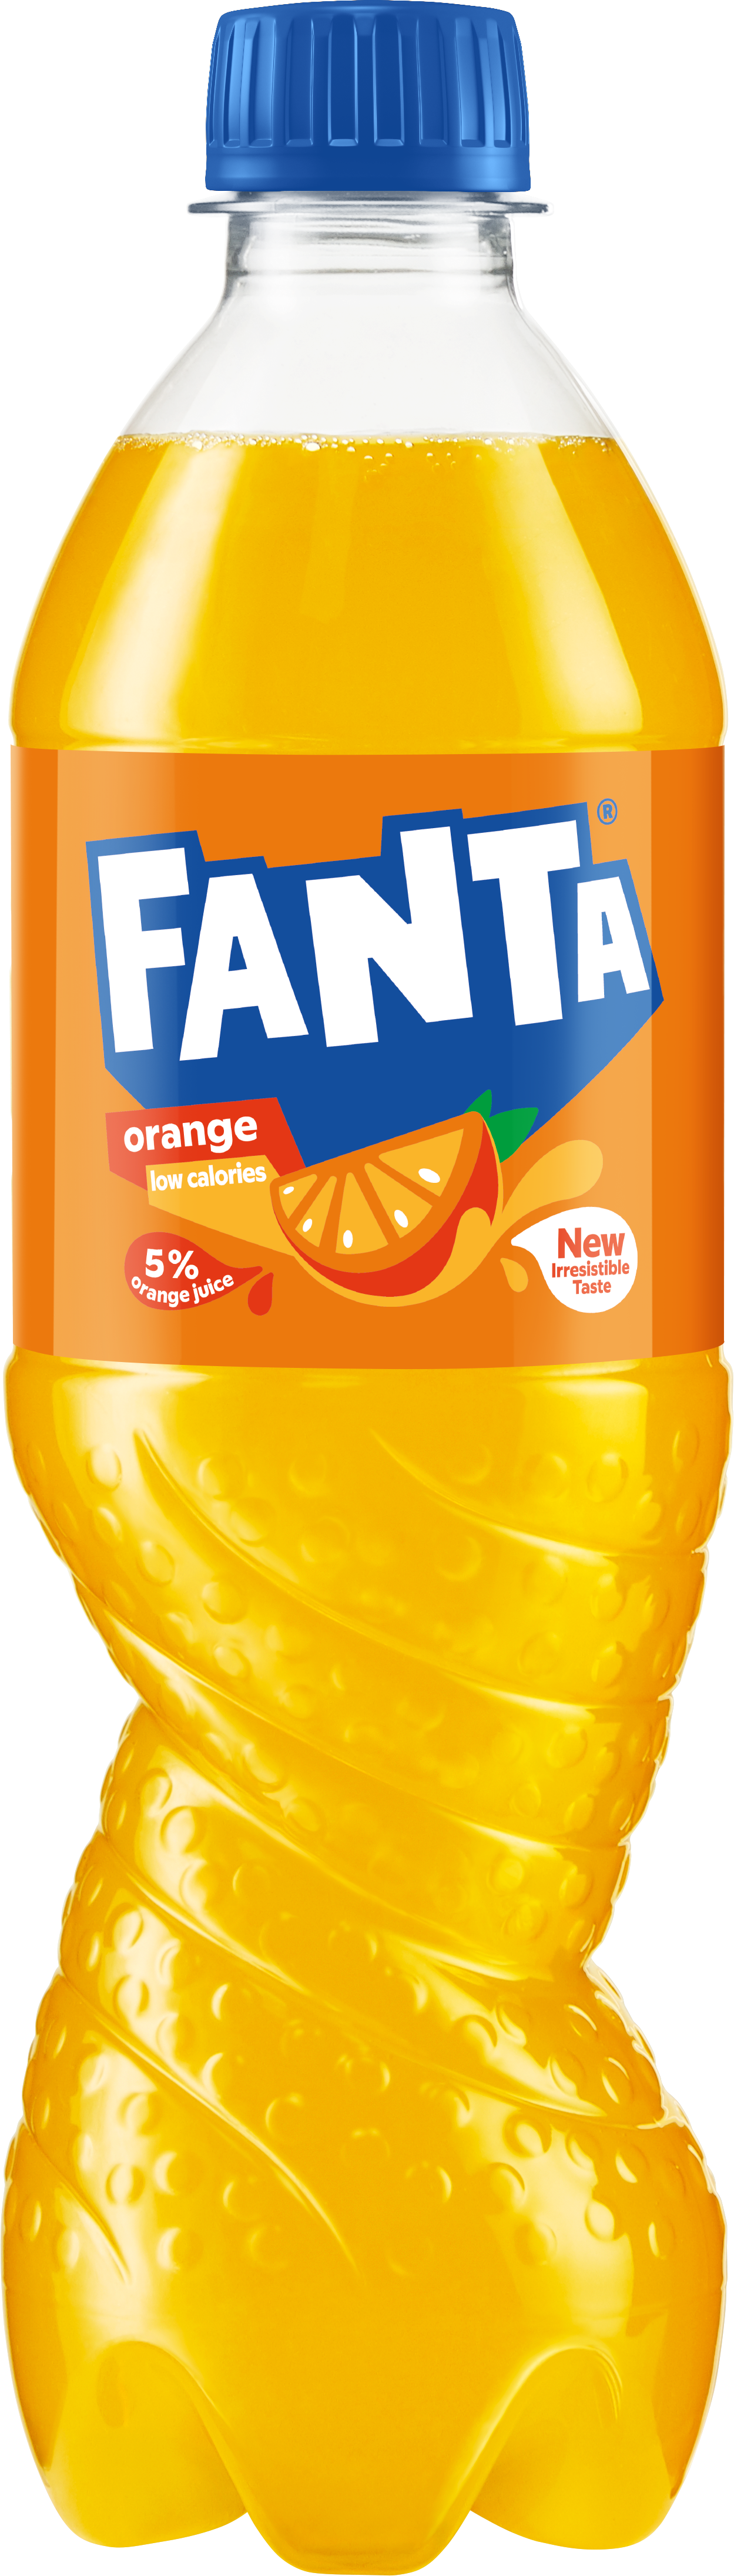 Fanta Orange buteliuko nuotrauka